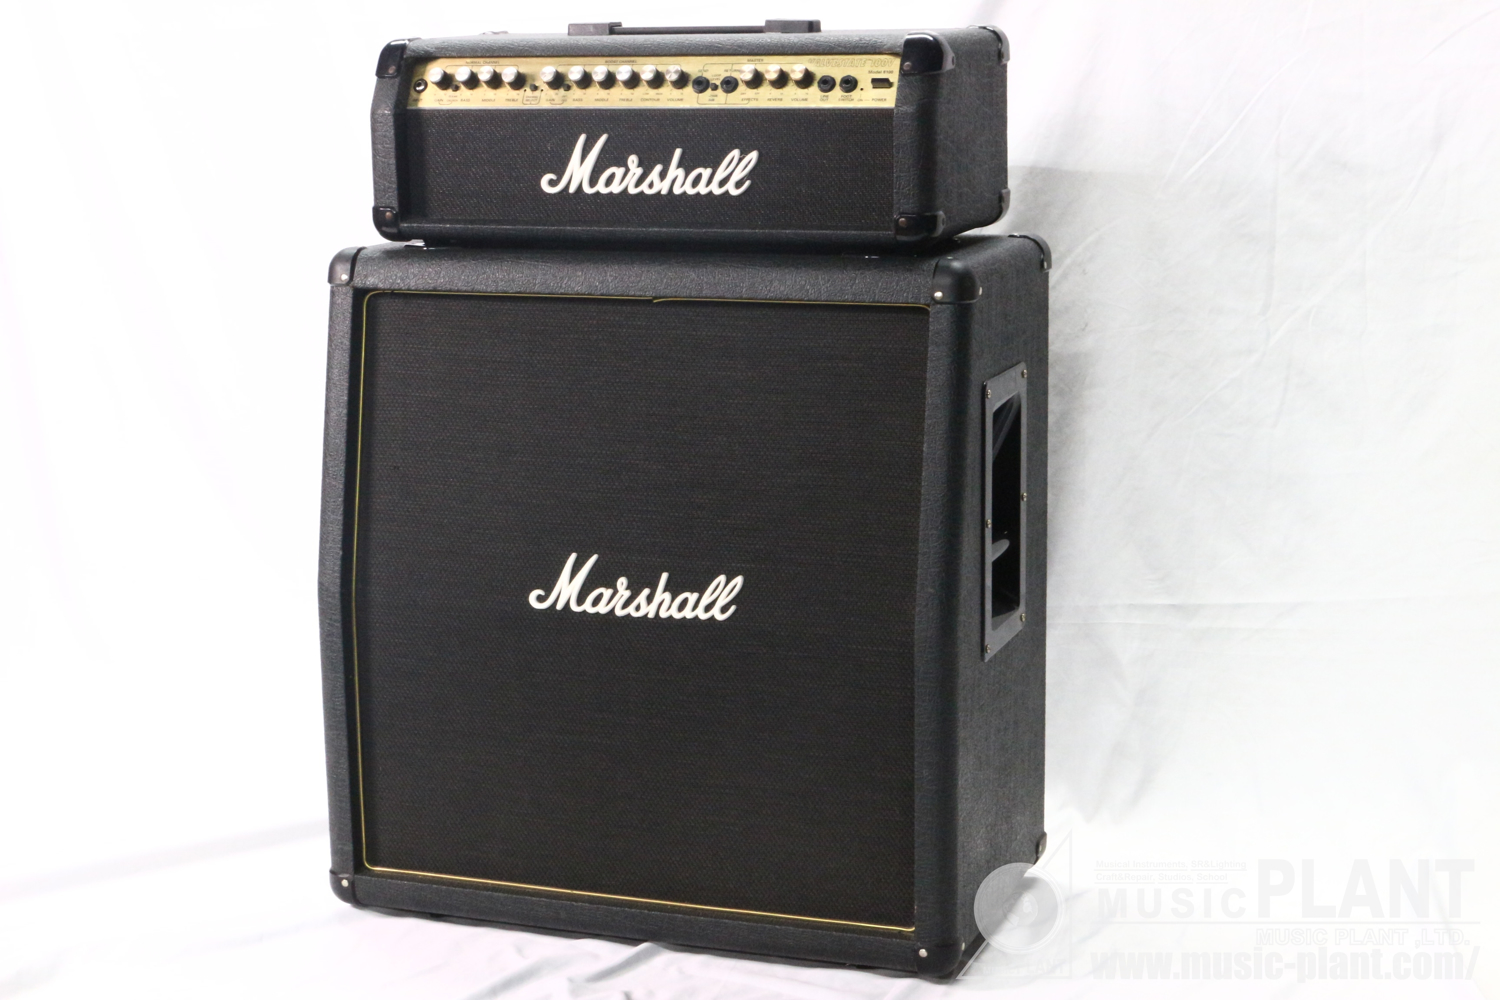 Marshall　8100　ギターアンプVALVESTATE　WEBSHOP　100　Model　AVT412　SET中古品()売却済みです。あしからずご了承ください。　MUSIC　PLANT